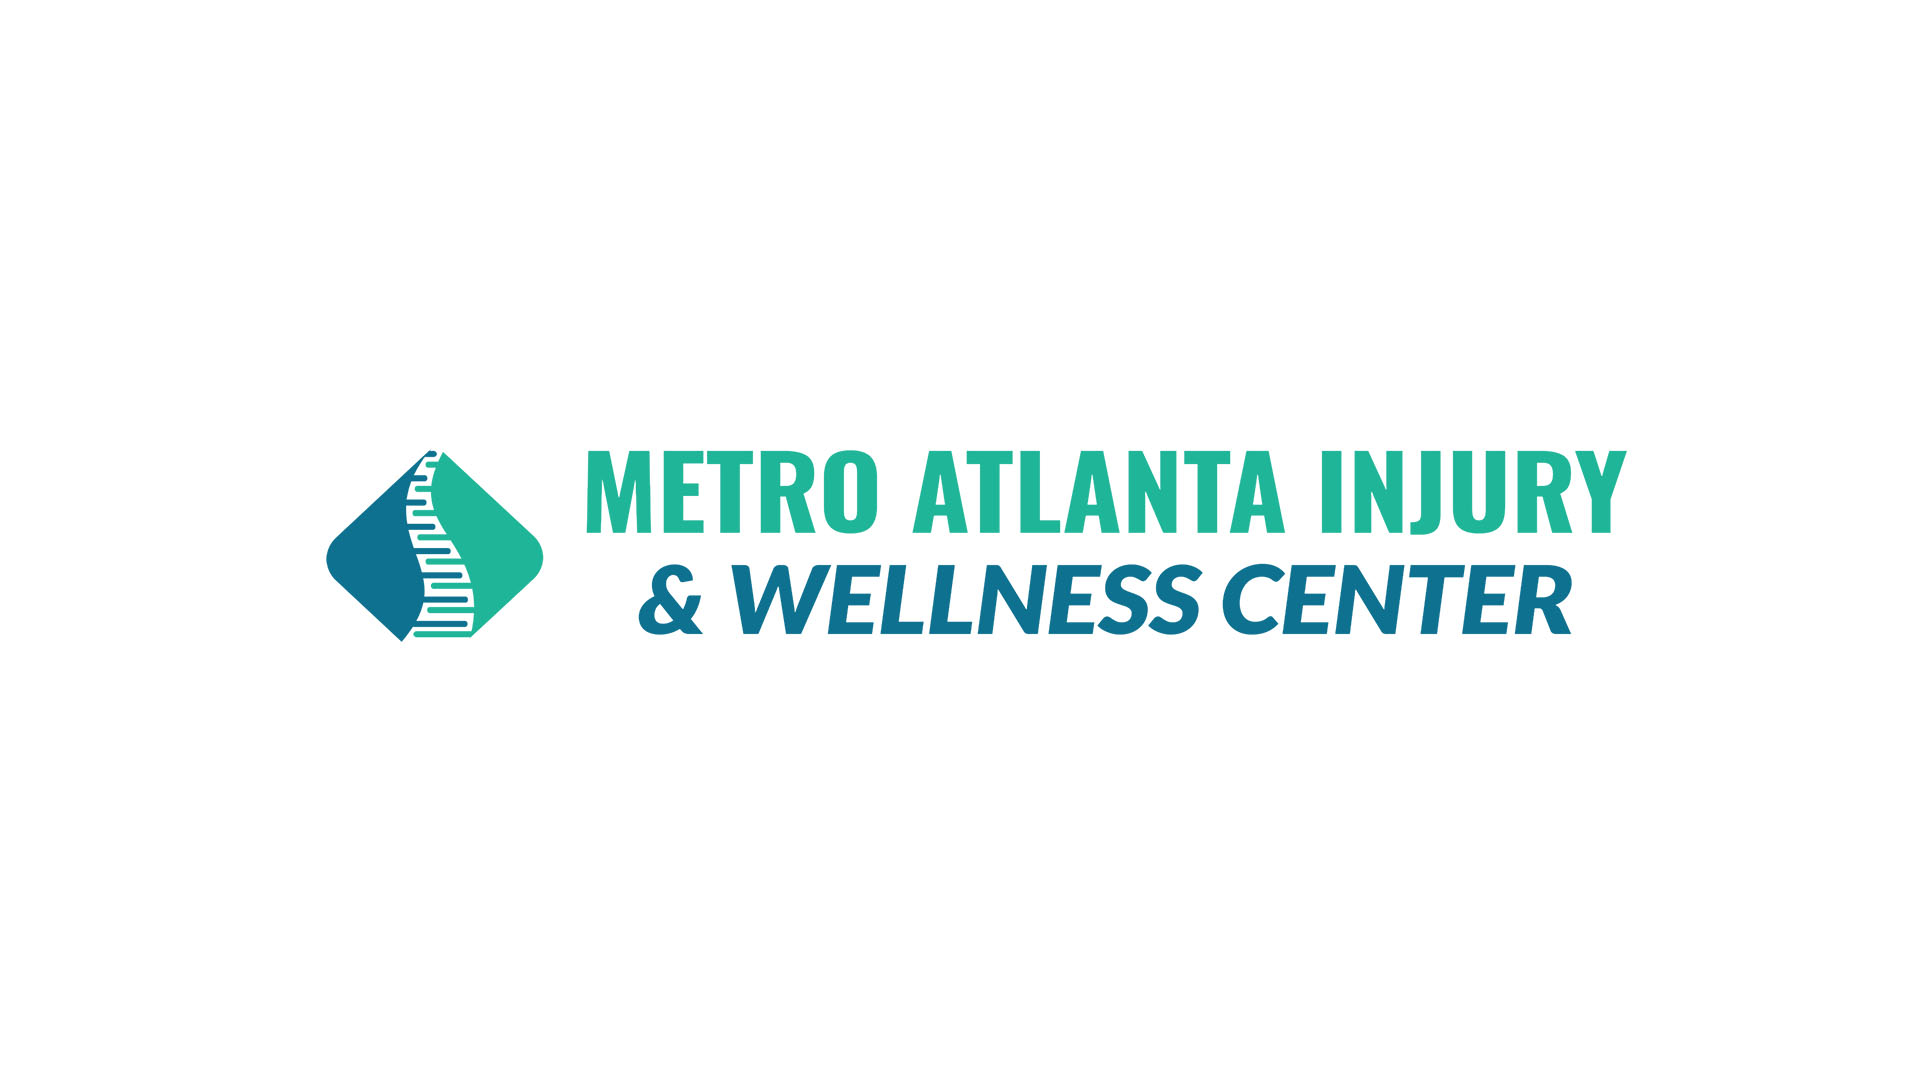 Metro Atlanta Injury & Wellness Center